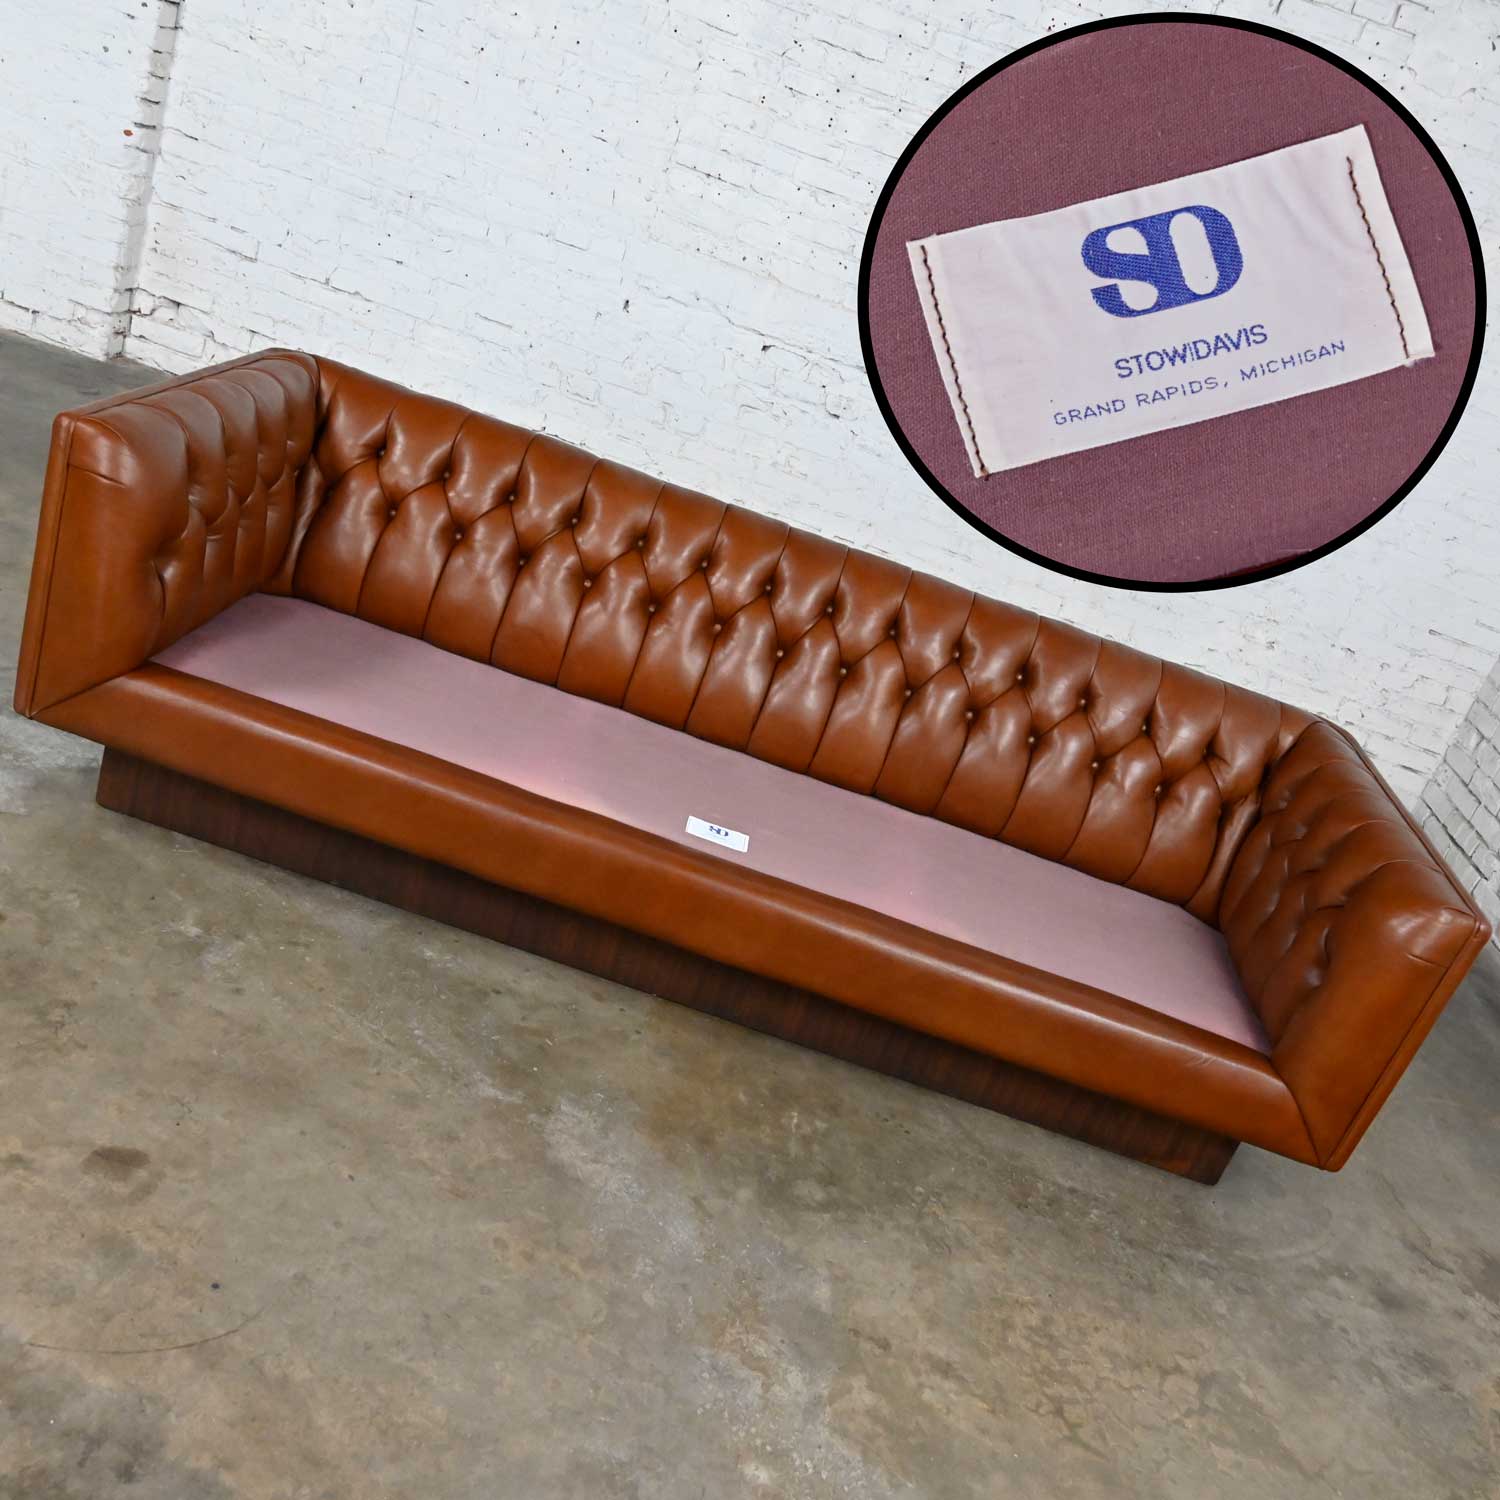 Stow & Davis Cognac Leather Modern Tuxedo Chesterfield Style Tufted Sofa with Walnut Plinth Base